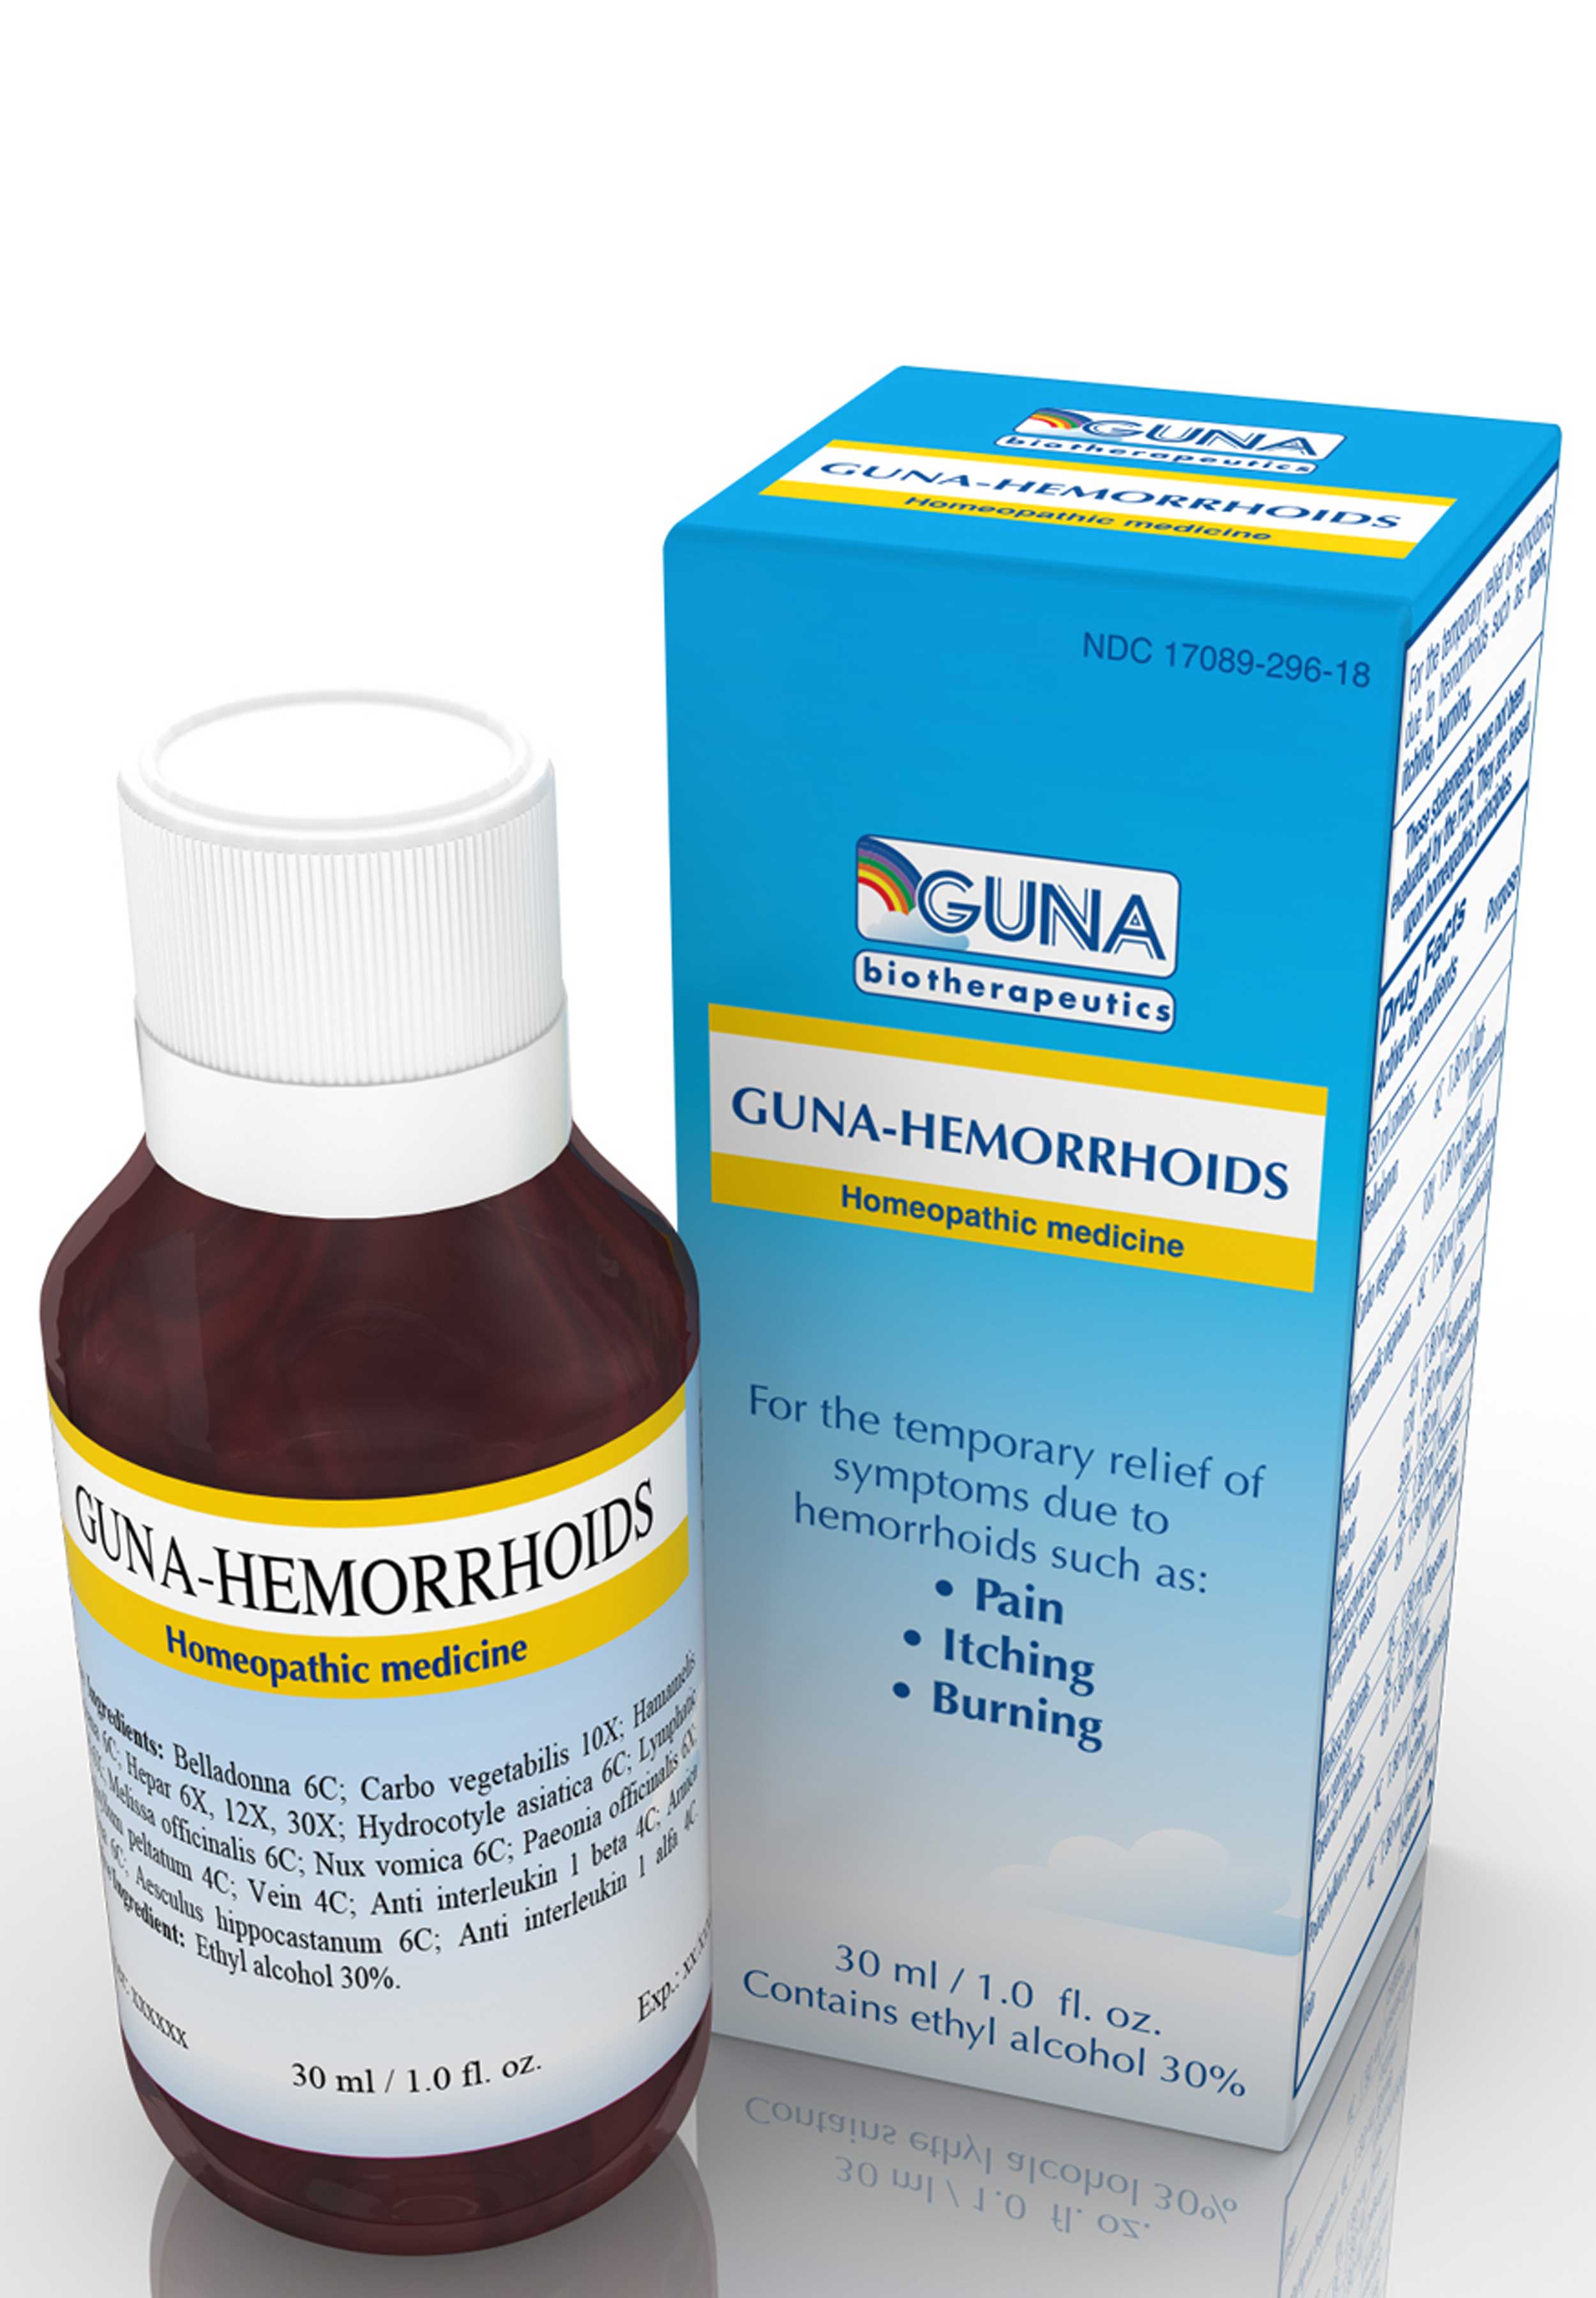 GUNA Biotherapeutics GUNA-Hemorrhoids